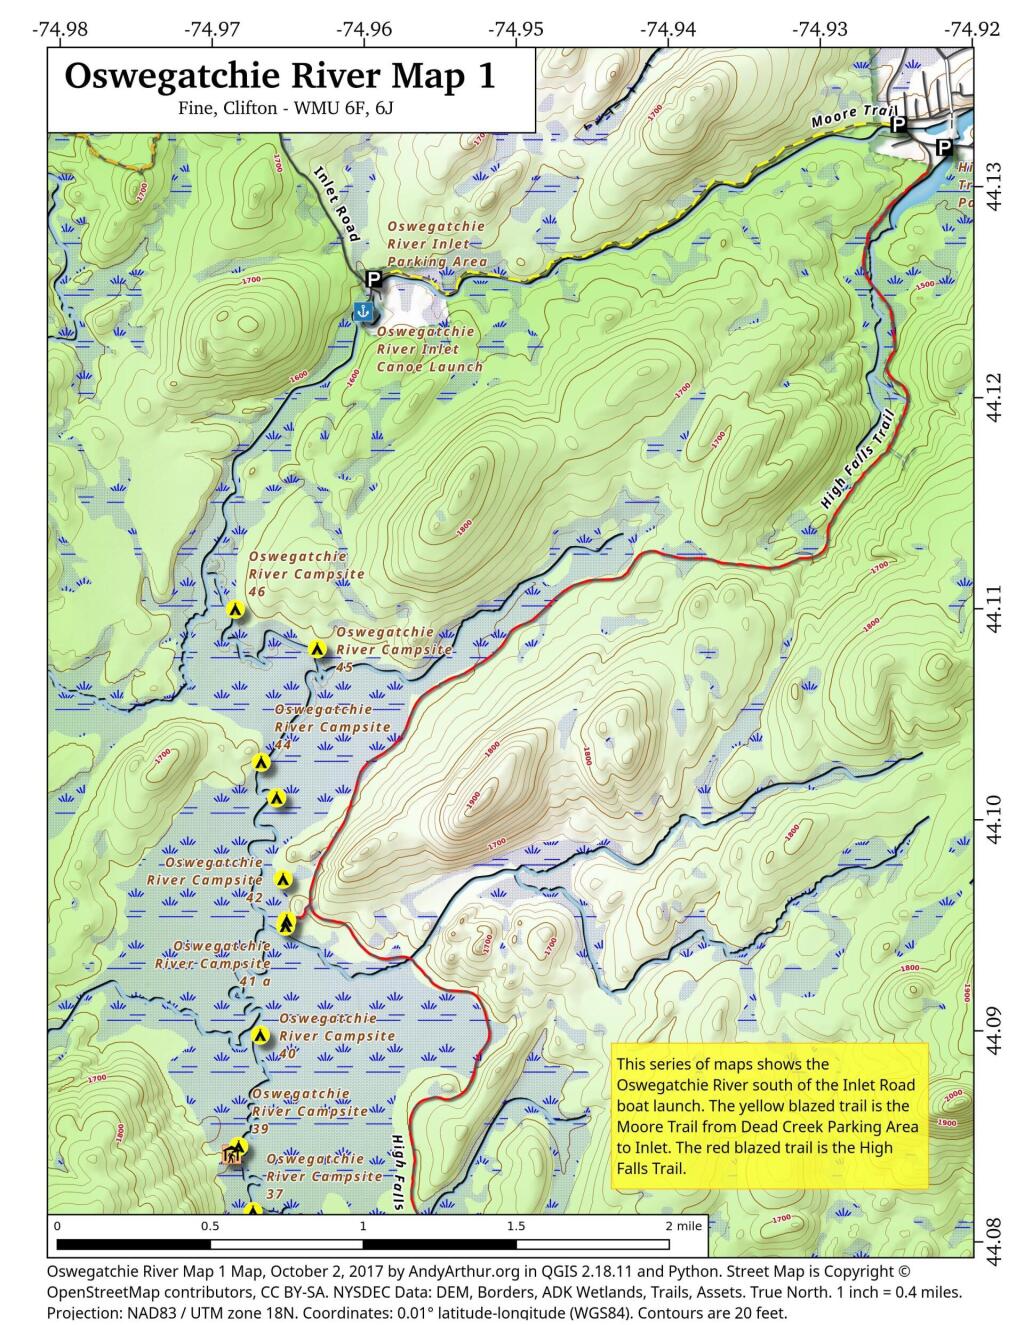  Oswegatchie River Map 1